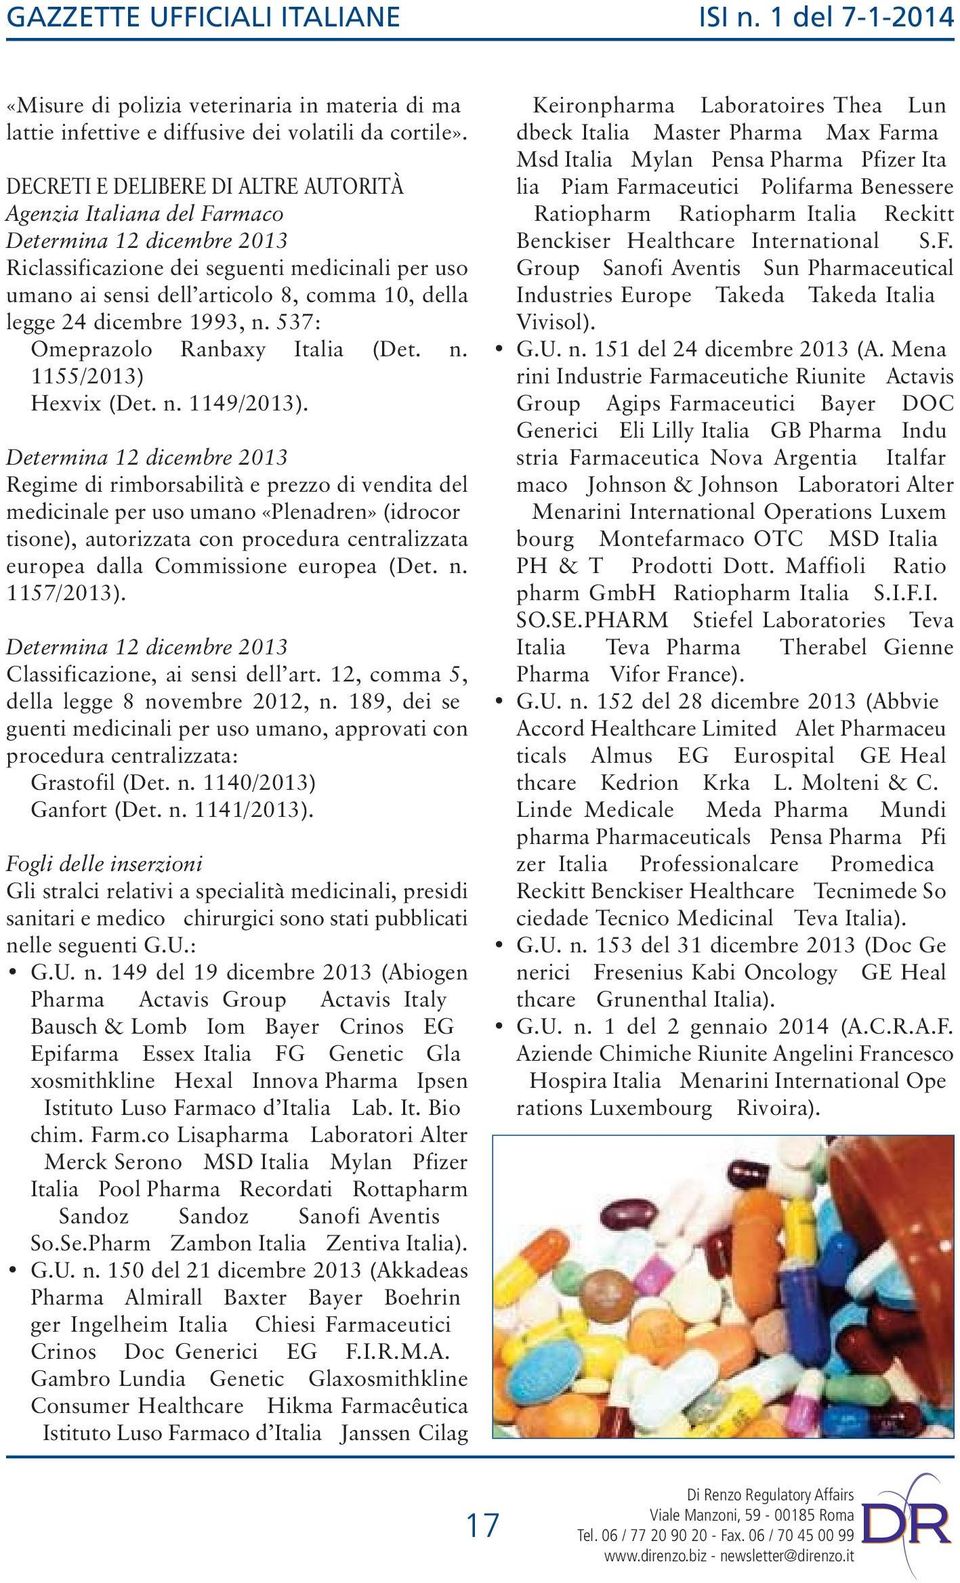 dicembre 1993, n. 537: Omeprazolo Ranbaxy Italia (Det. n. 1155/2013) Hexvix (Det. n. 1149/2013).